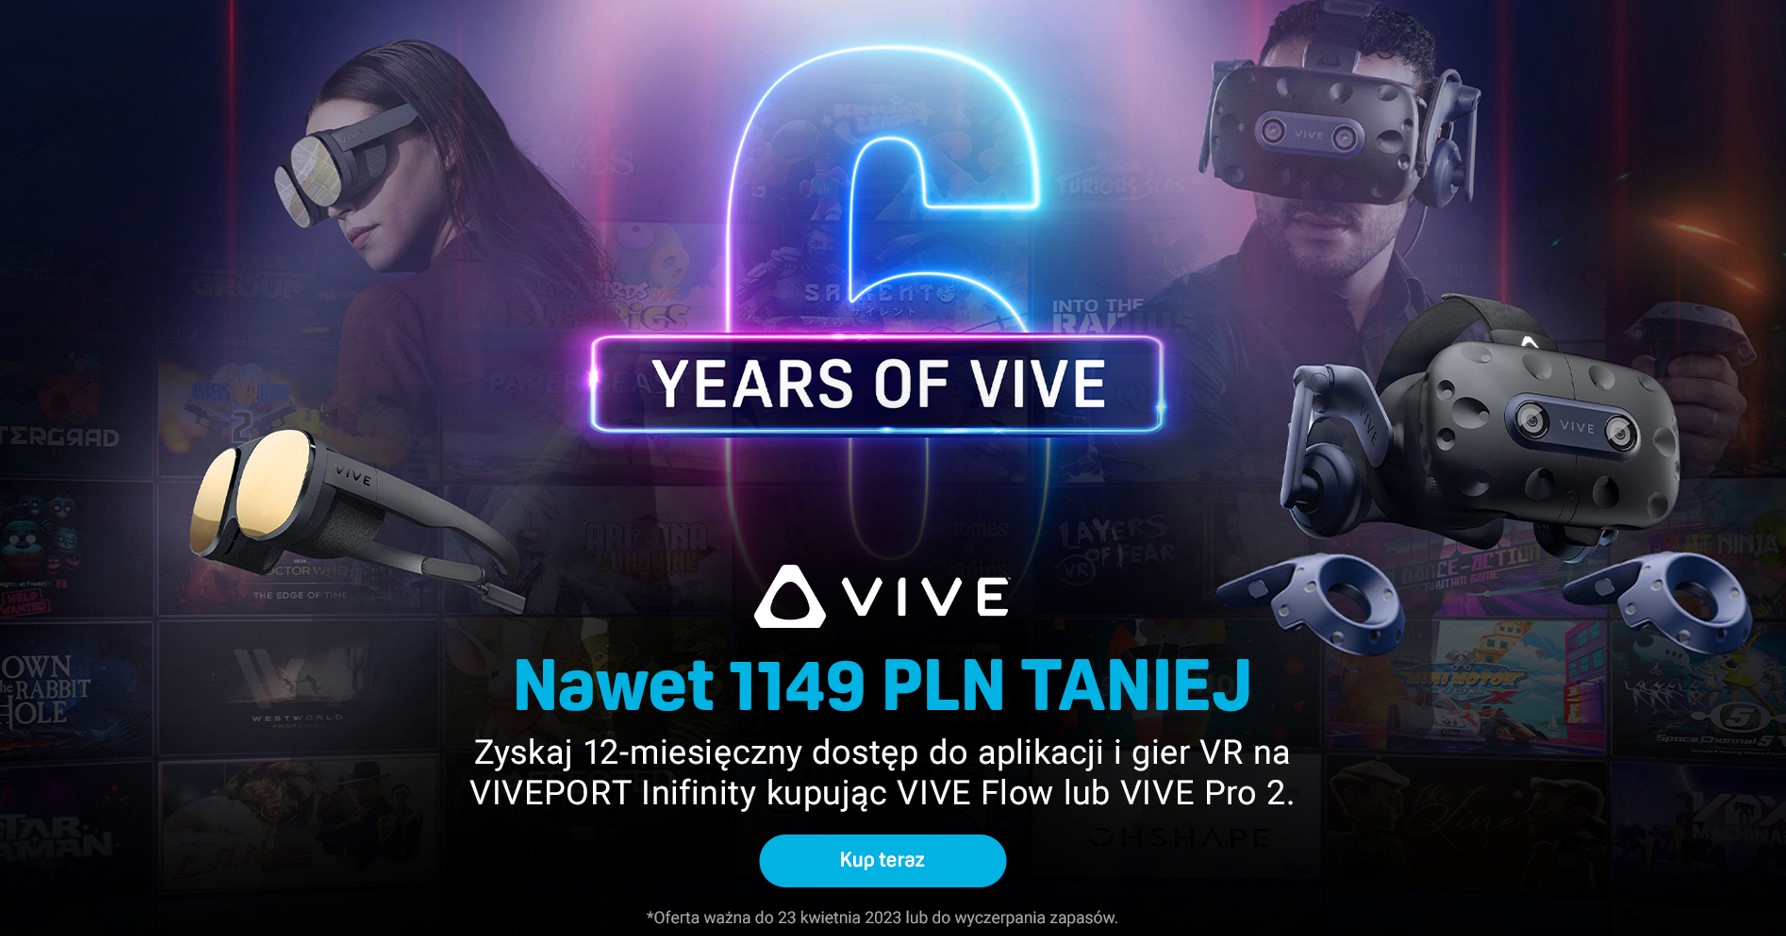 HTC VIVE z rabatami do nawet 1149 zł z okazji 6-lecia